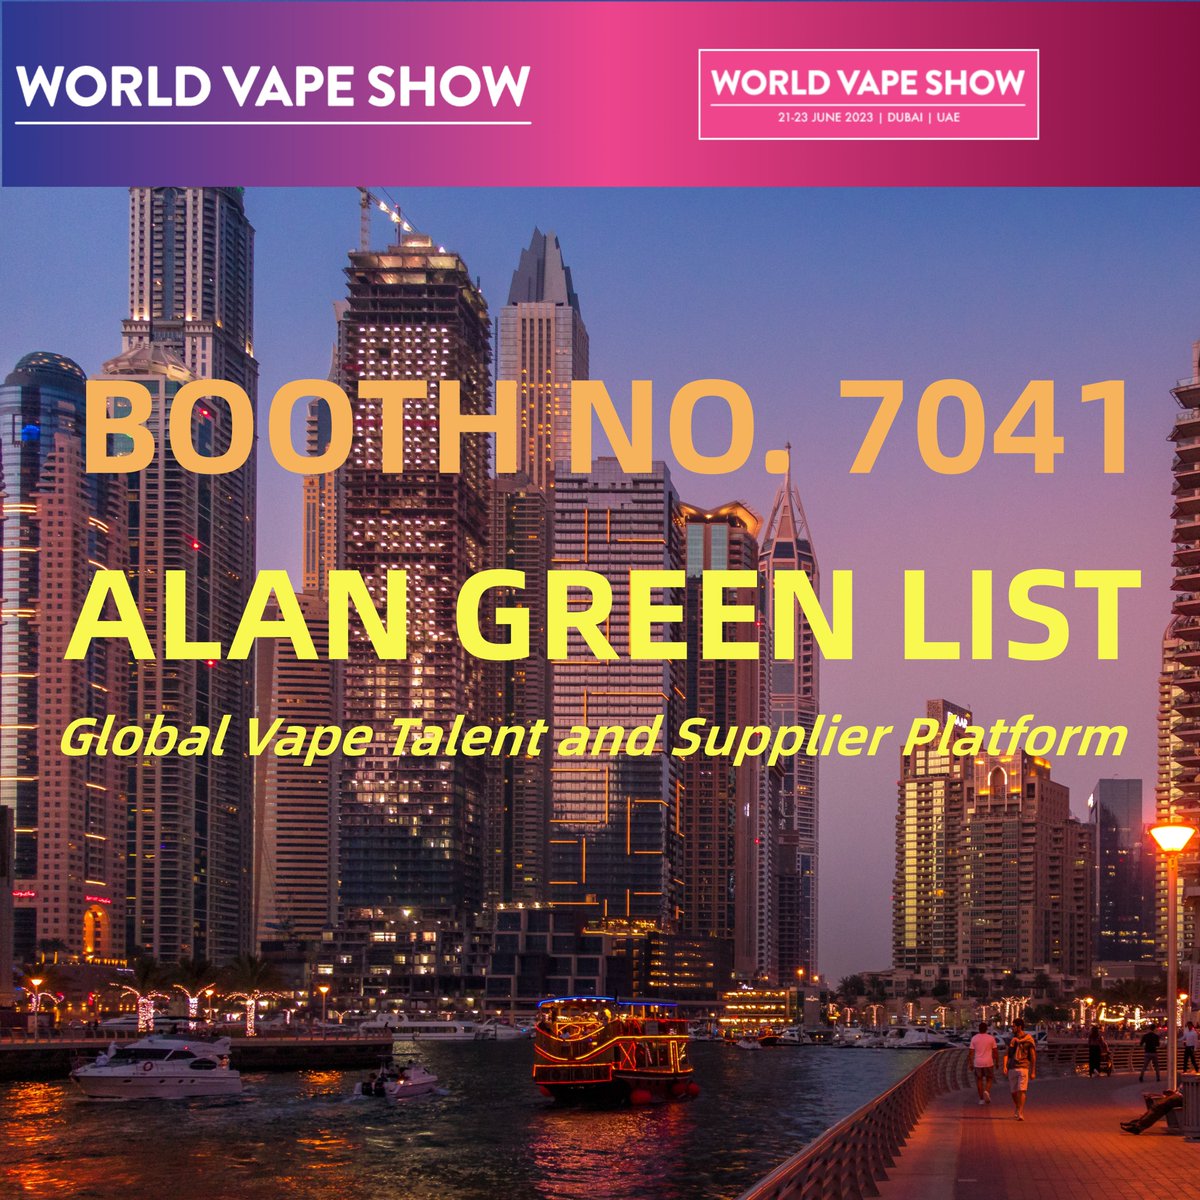 Dubai World Vape Show 
Contact Alan Green, you can get half vape industry talents and half good suppliers
Date: 21-23 JUNE 2023 
#worldvapeshow #worldvapeshowdubai #dubaivape #b2bevents #exhibitors  #b2bevents #eventprofs #dubaievent #wvsdubai #vapeevent #vapeshow #vapeinfluencer